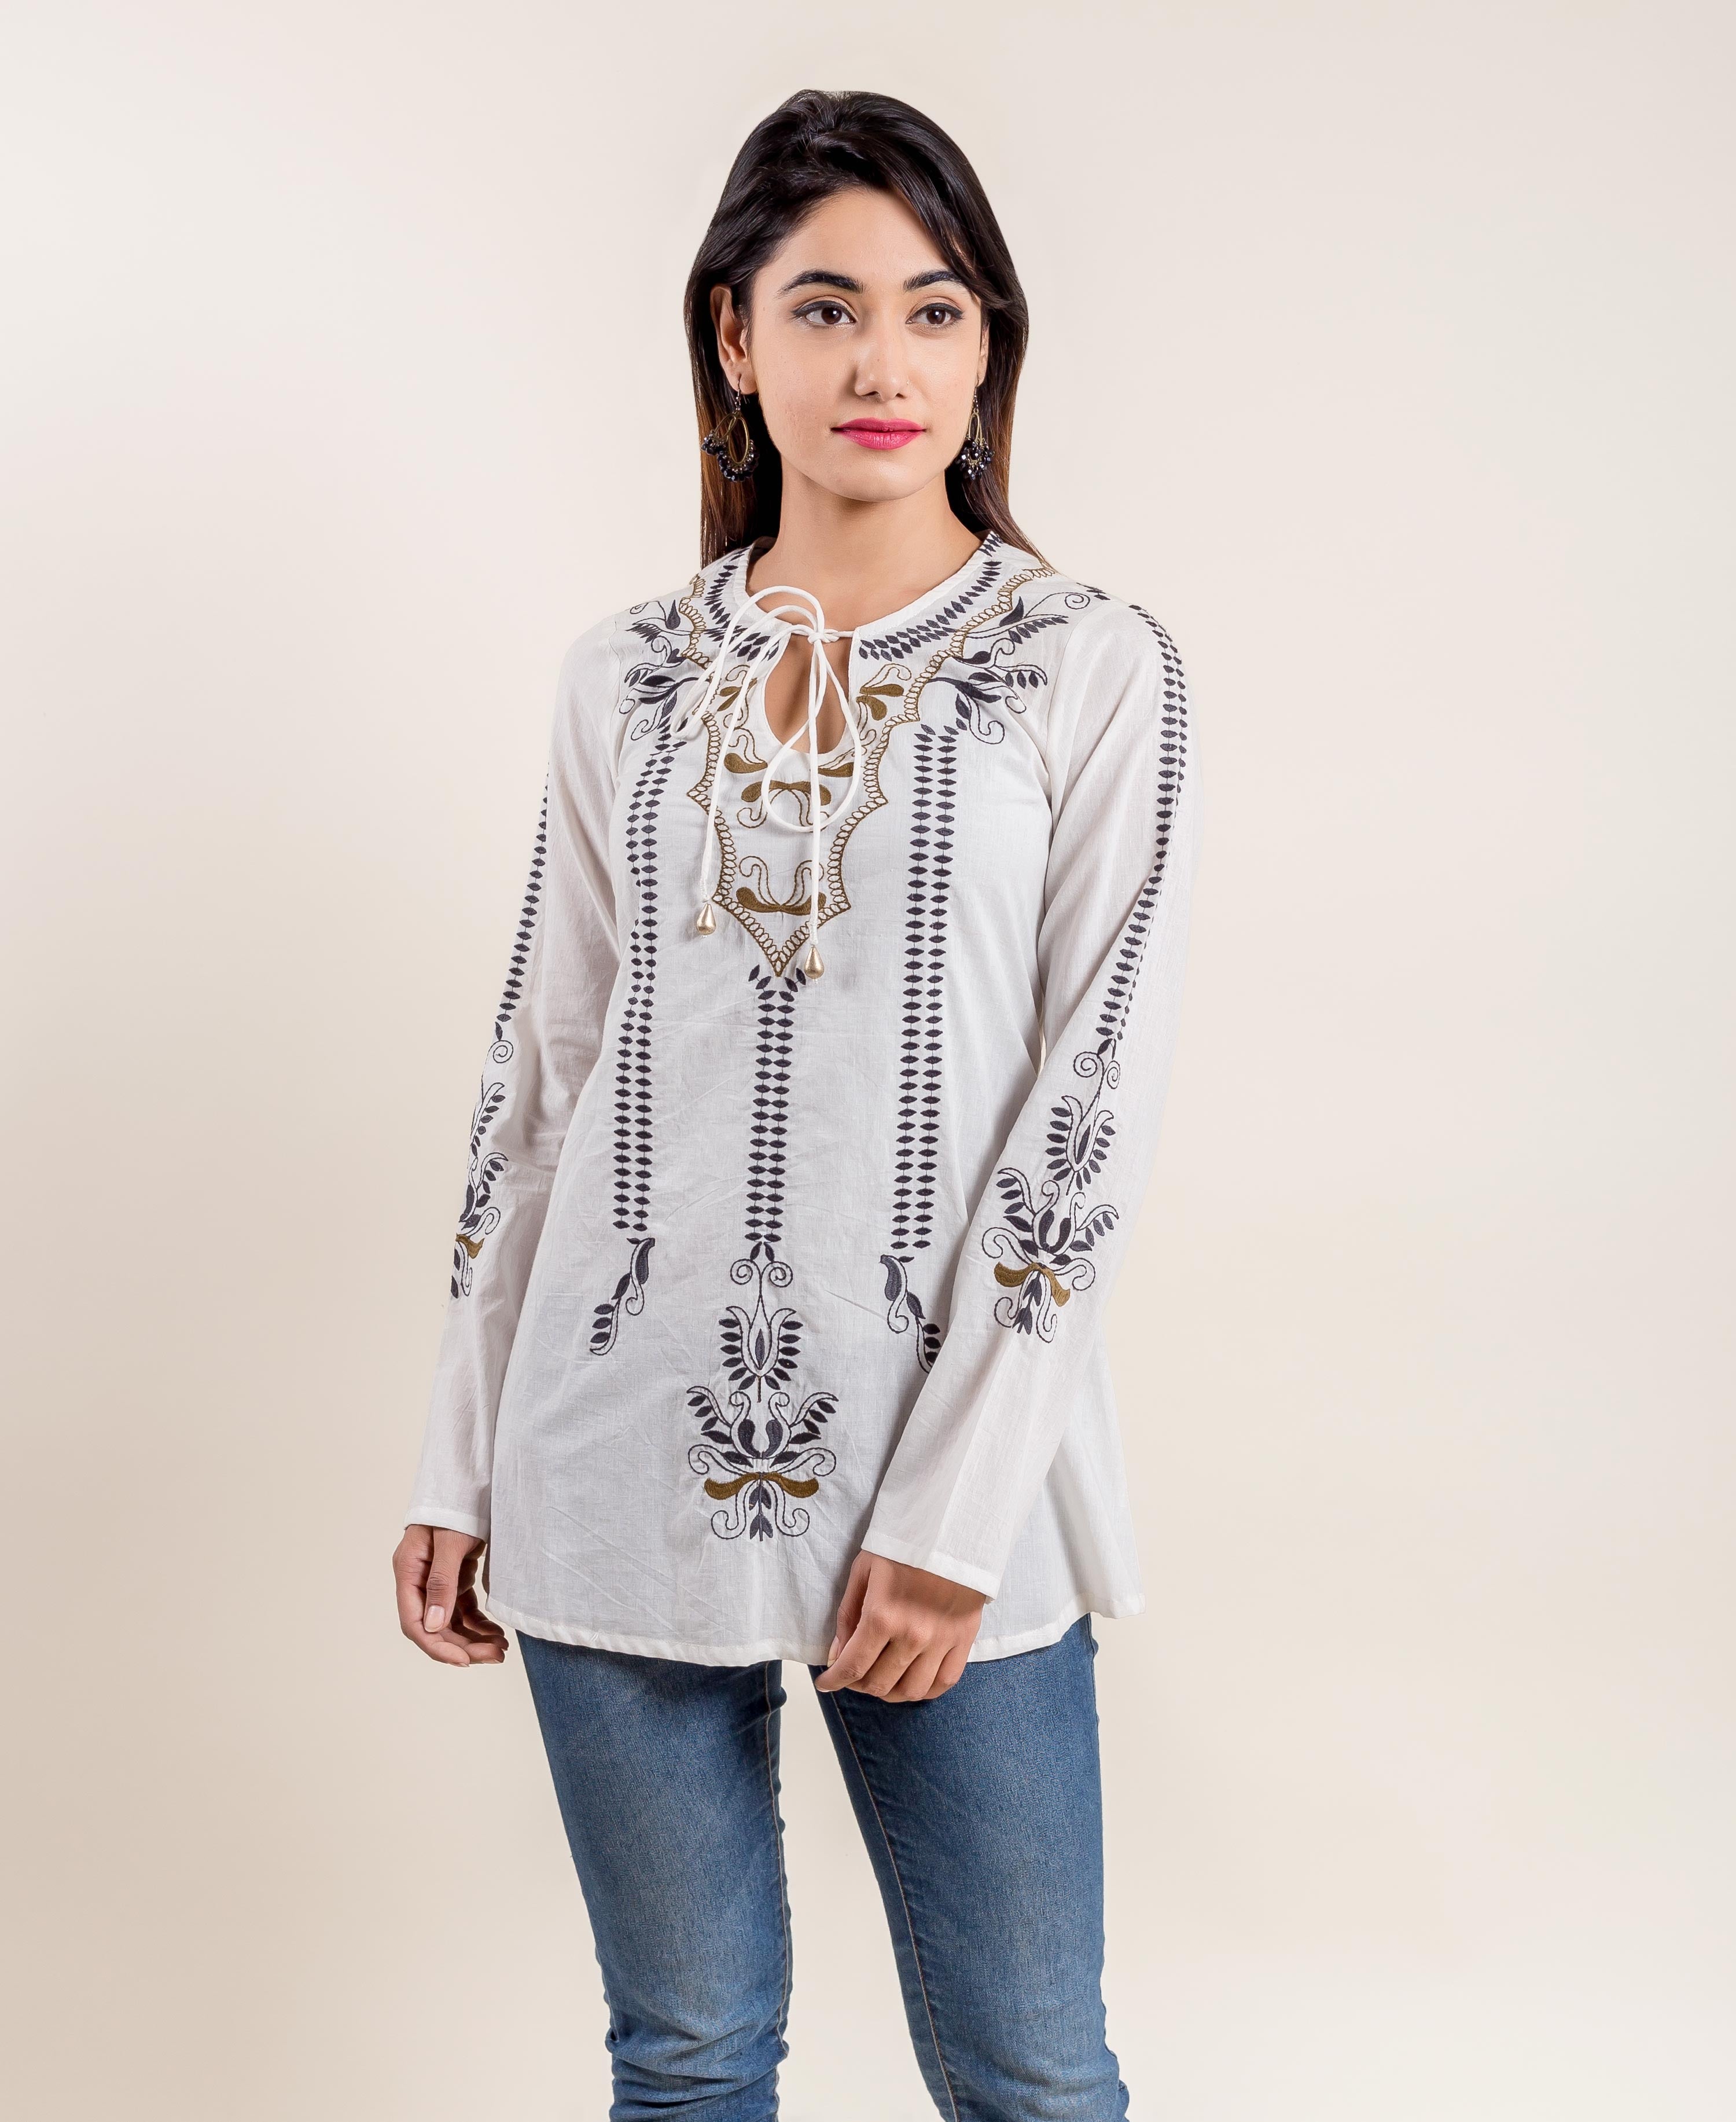 Get online offer on Designer Short Kurtis White Color Short Cotton Kurtis  Kurta With Embroidery Work  Lady India